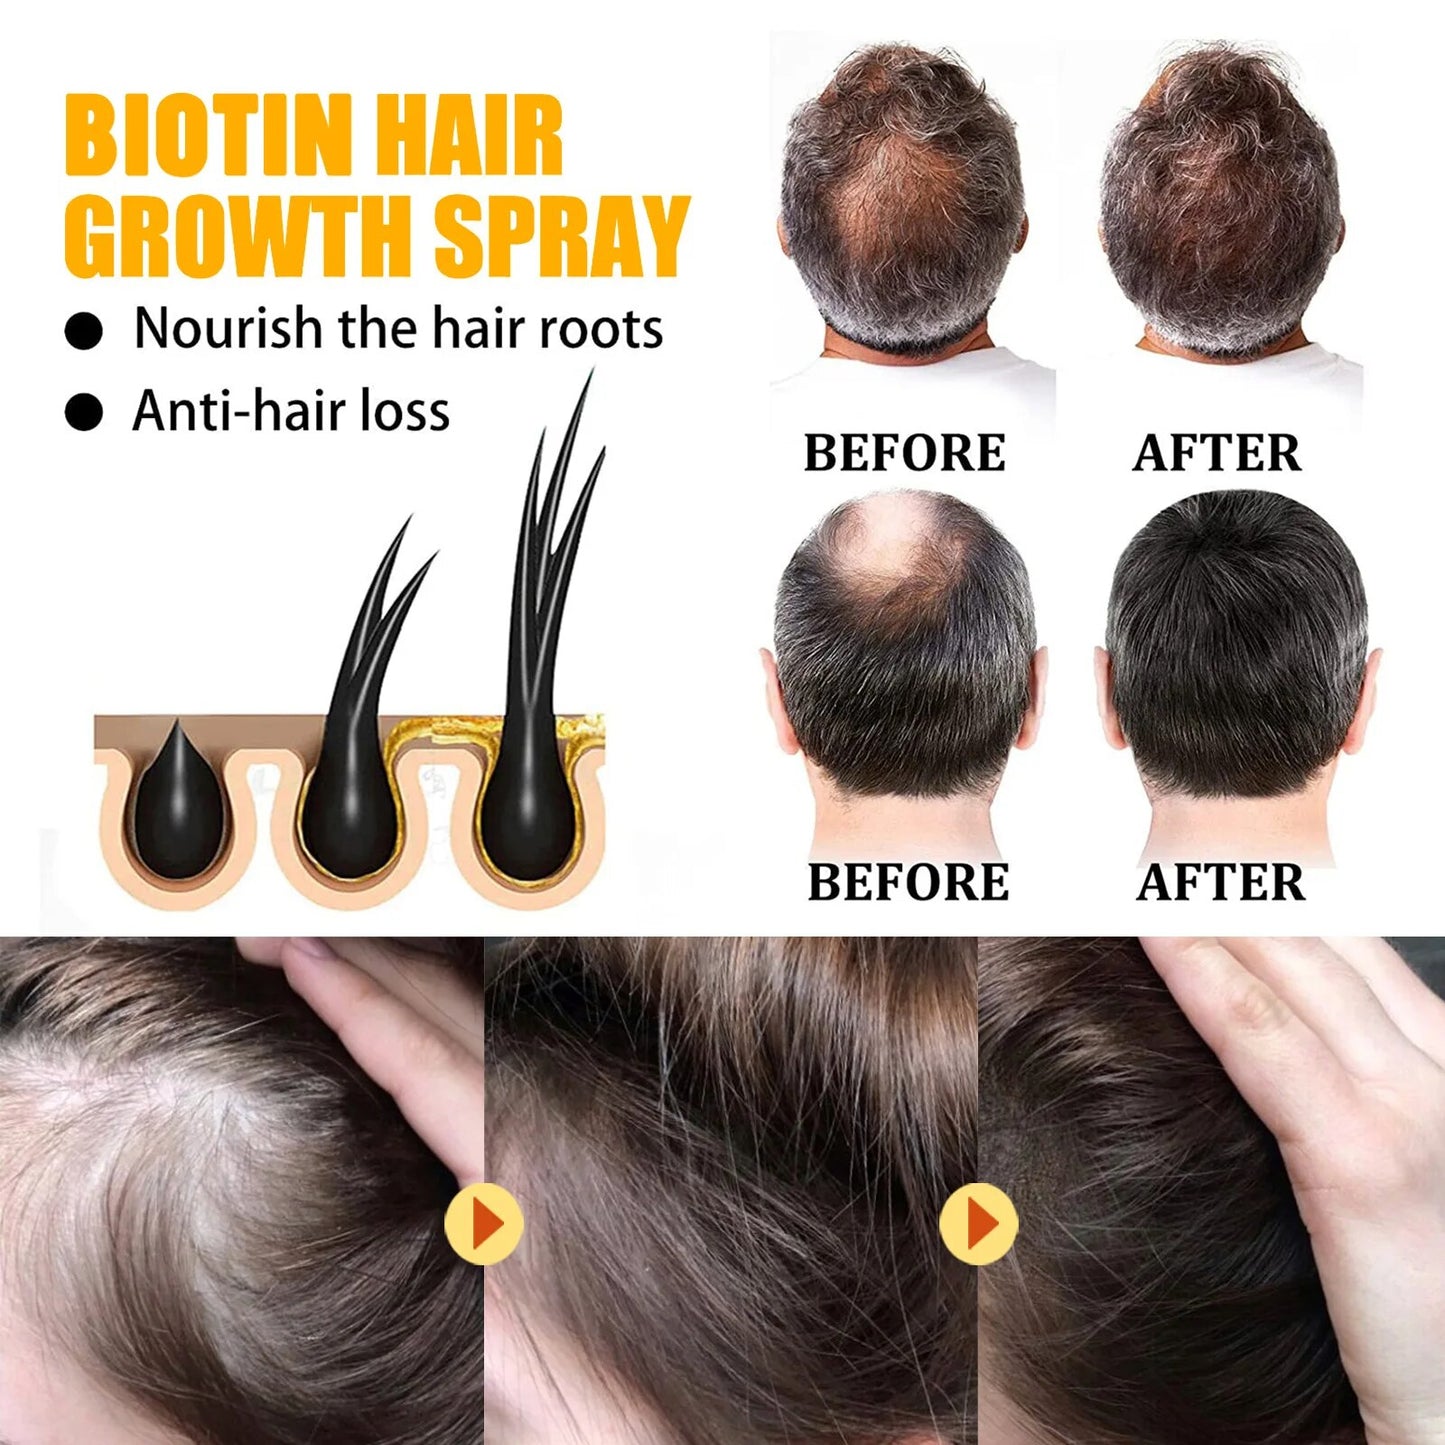 Biotin Hair Growth Spray